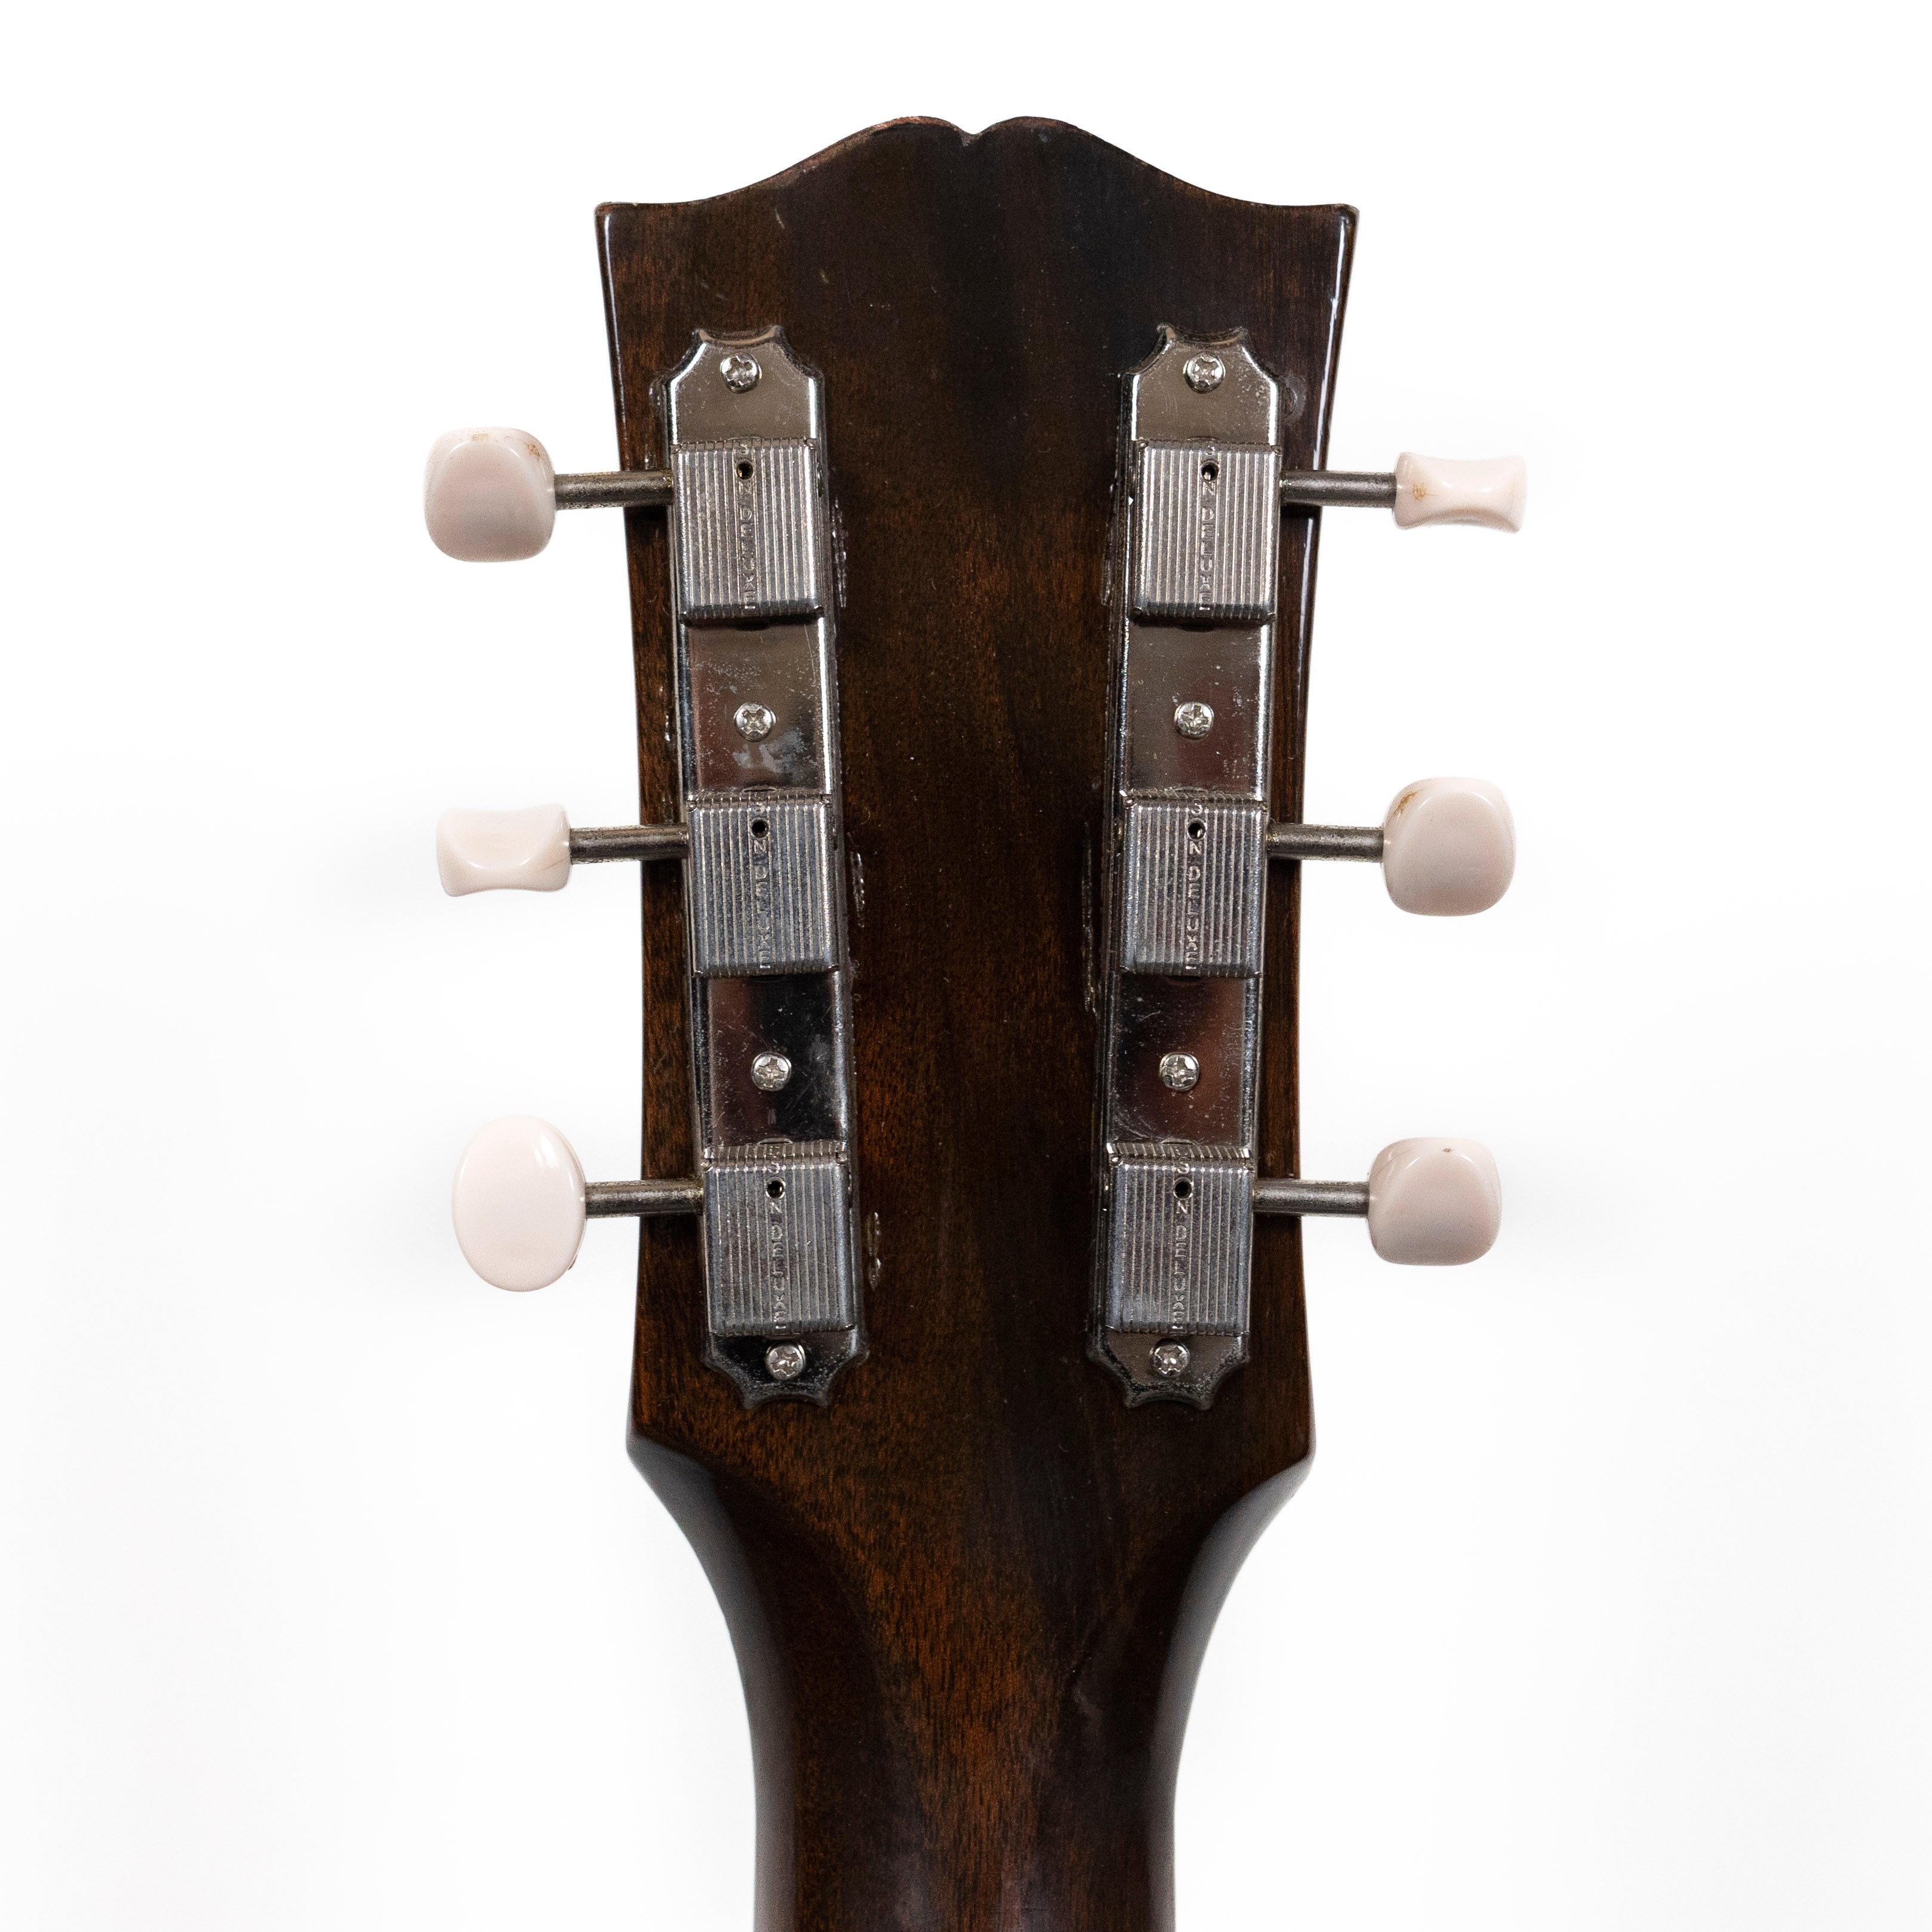 Gibson 1951 LG-2